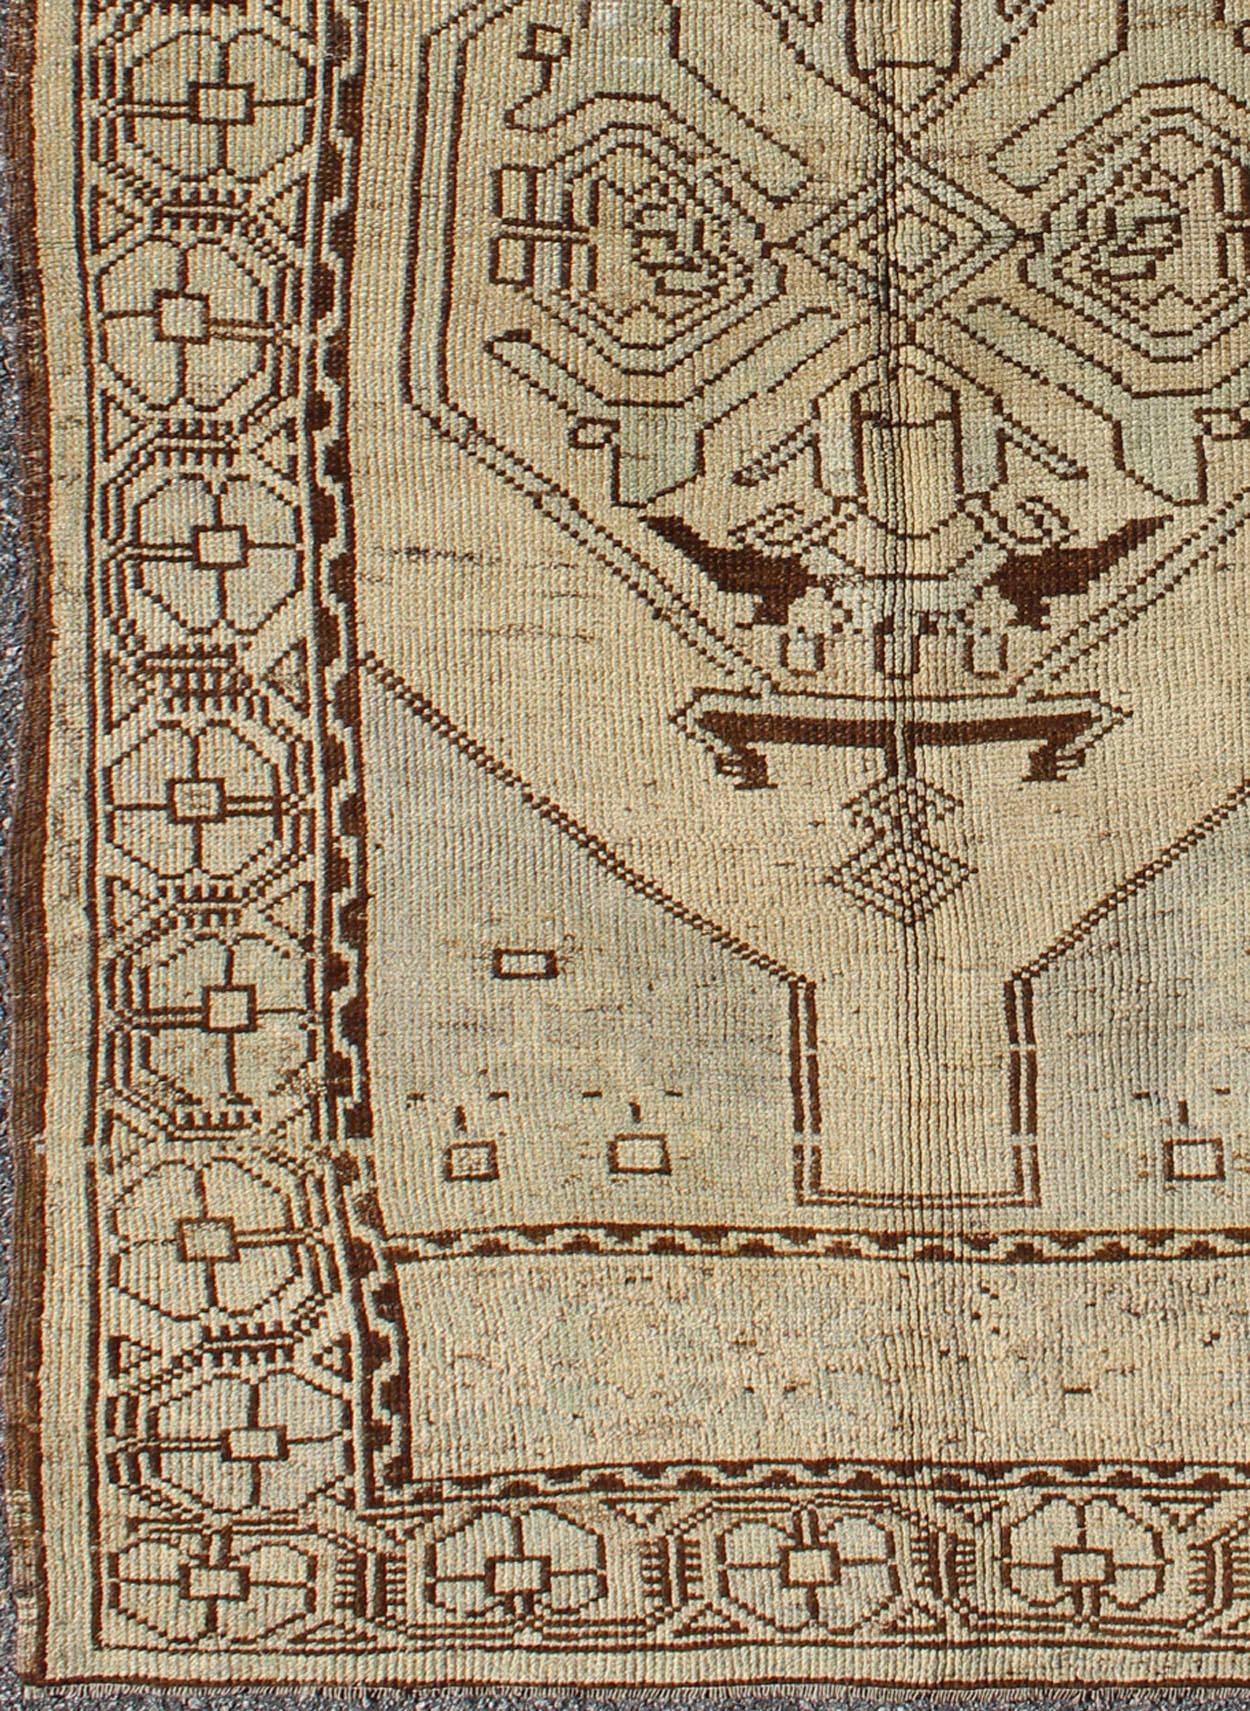 Geometric Tribal Vintage Turkish Oushak Rug in Brown, Cream, Light Blue and Tan. Keivan Woven Arts / rug TU-MTU-95055, country of origin / type: Turkey / Oushak, circa mid-20th century

This vintage Turkish Oushak rug (circa mid-20th century)